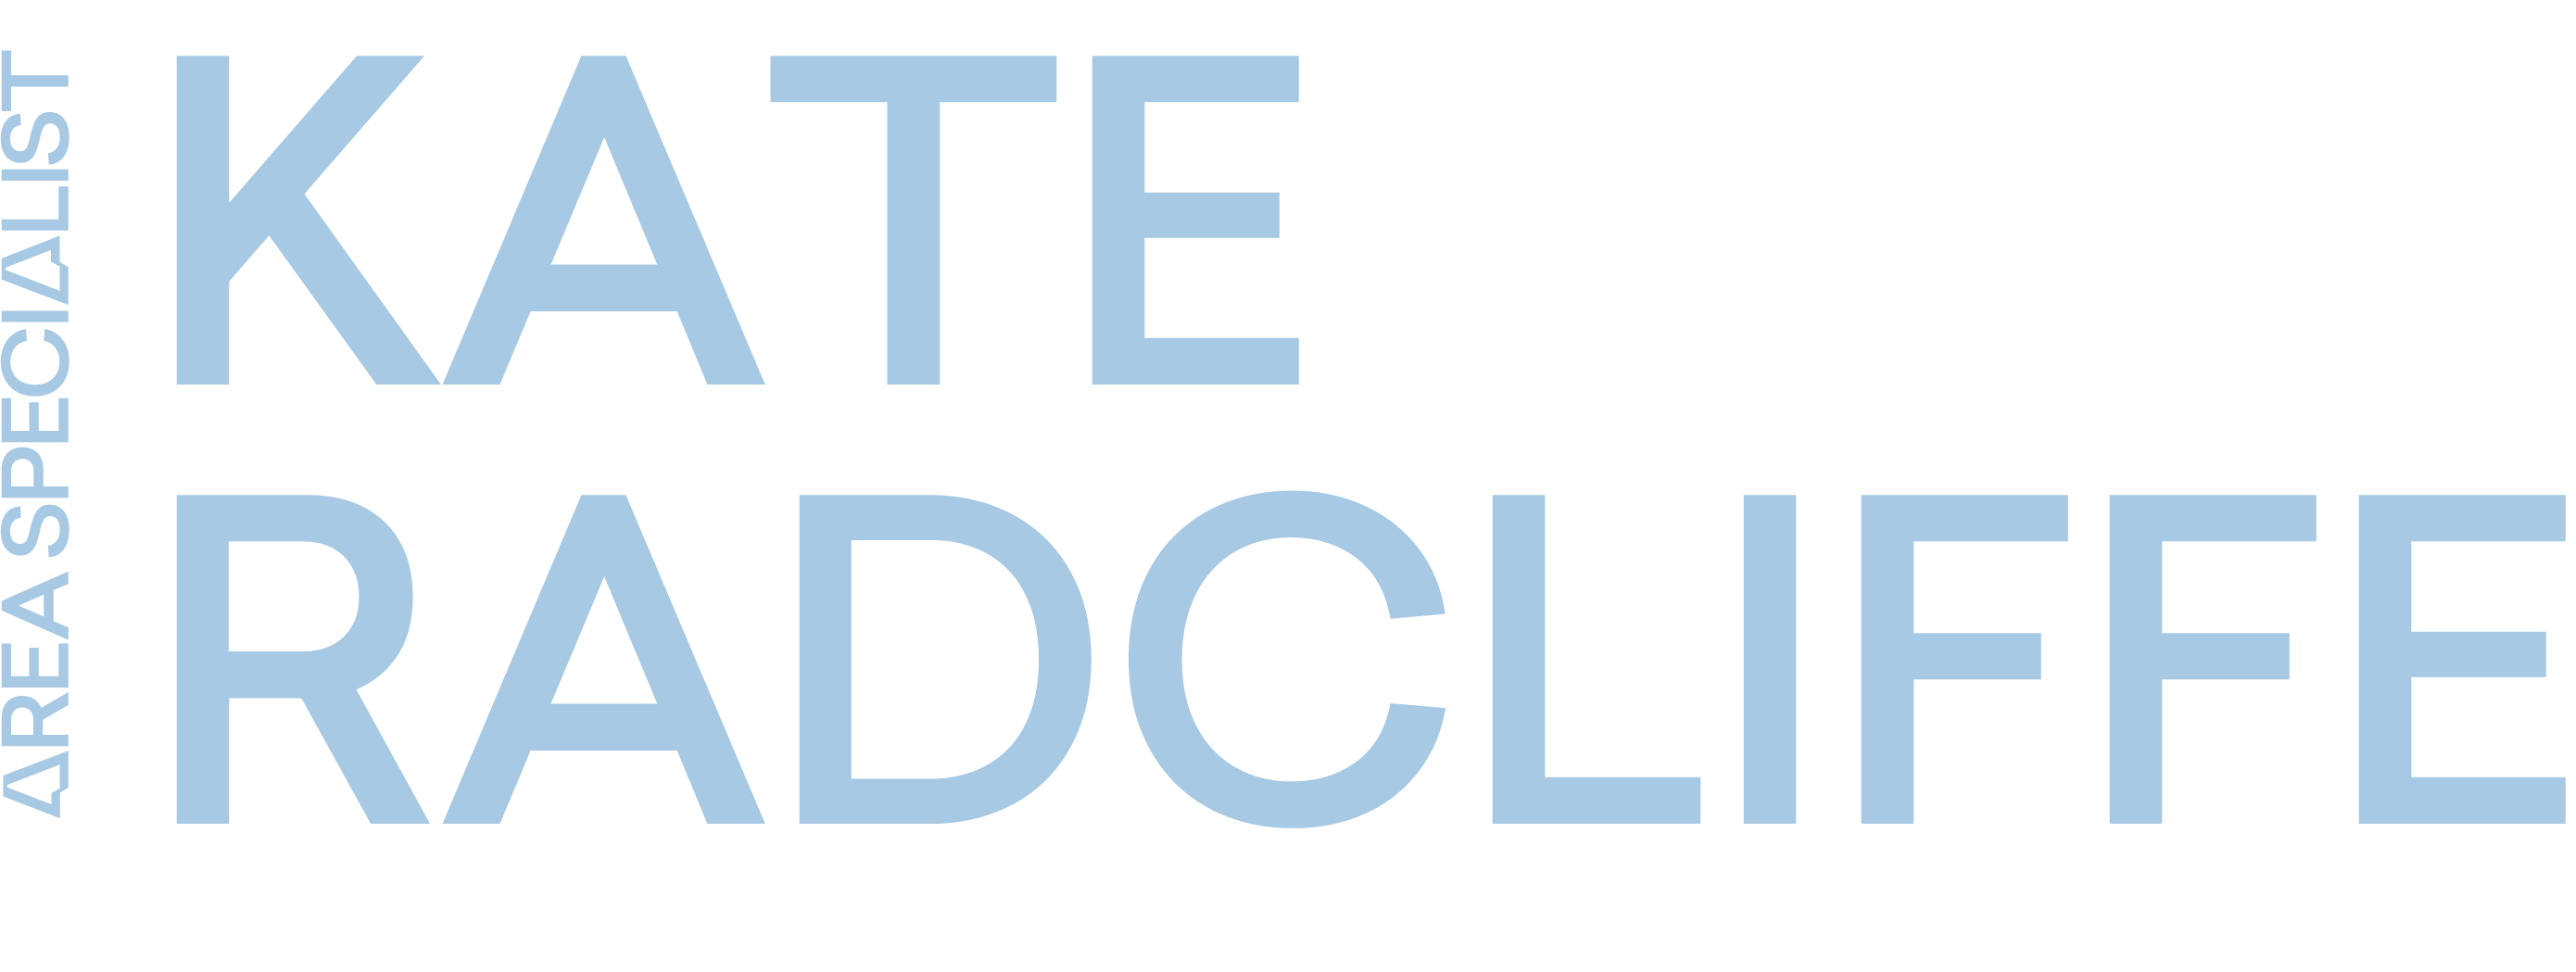 Kate's logo